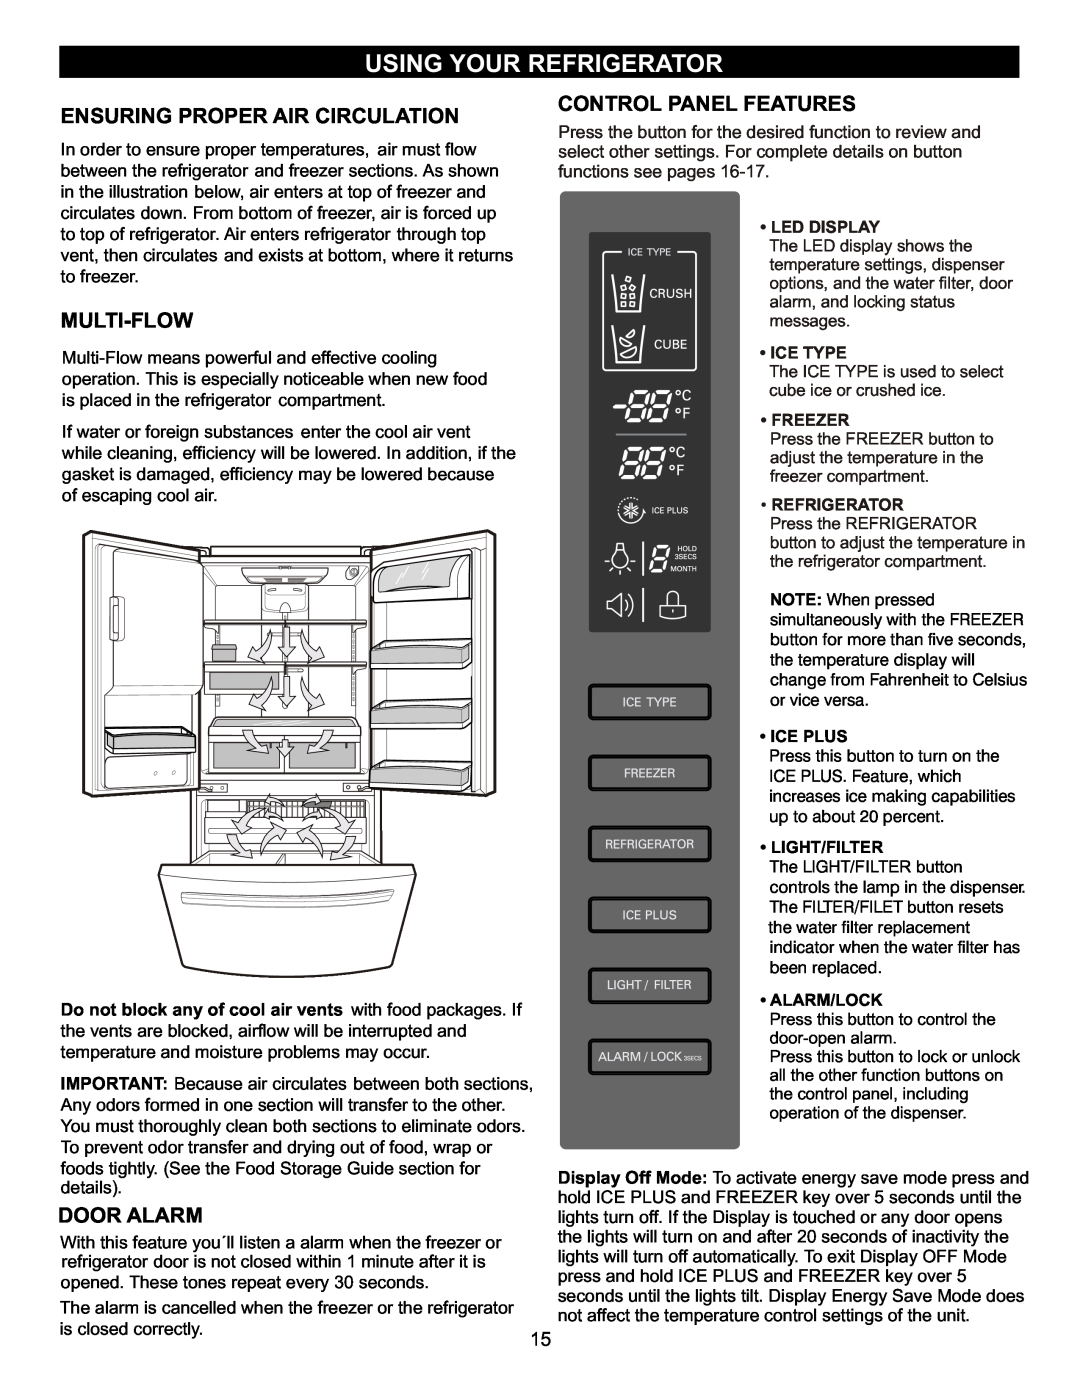 LG Electronics LFX23961SB, MFL47277003 Using Your Refrigerator, Ensuring Proper Air Circulation, Multi-Flow, Door Alarm 